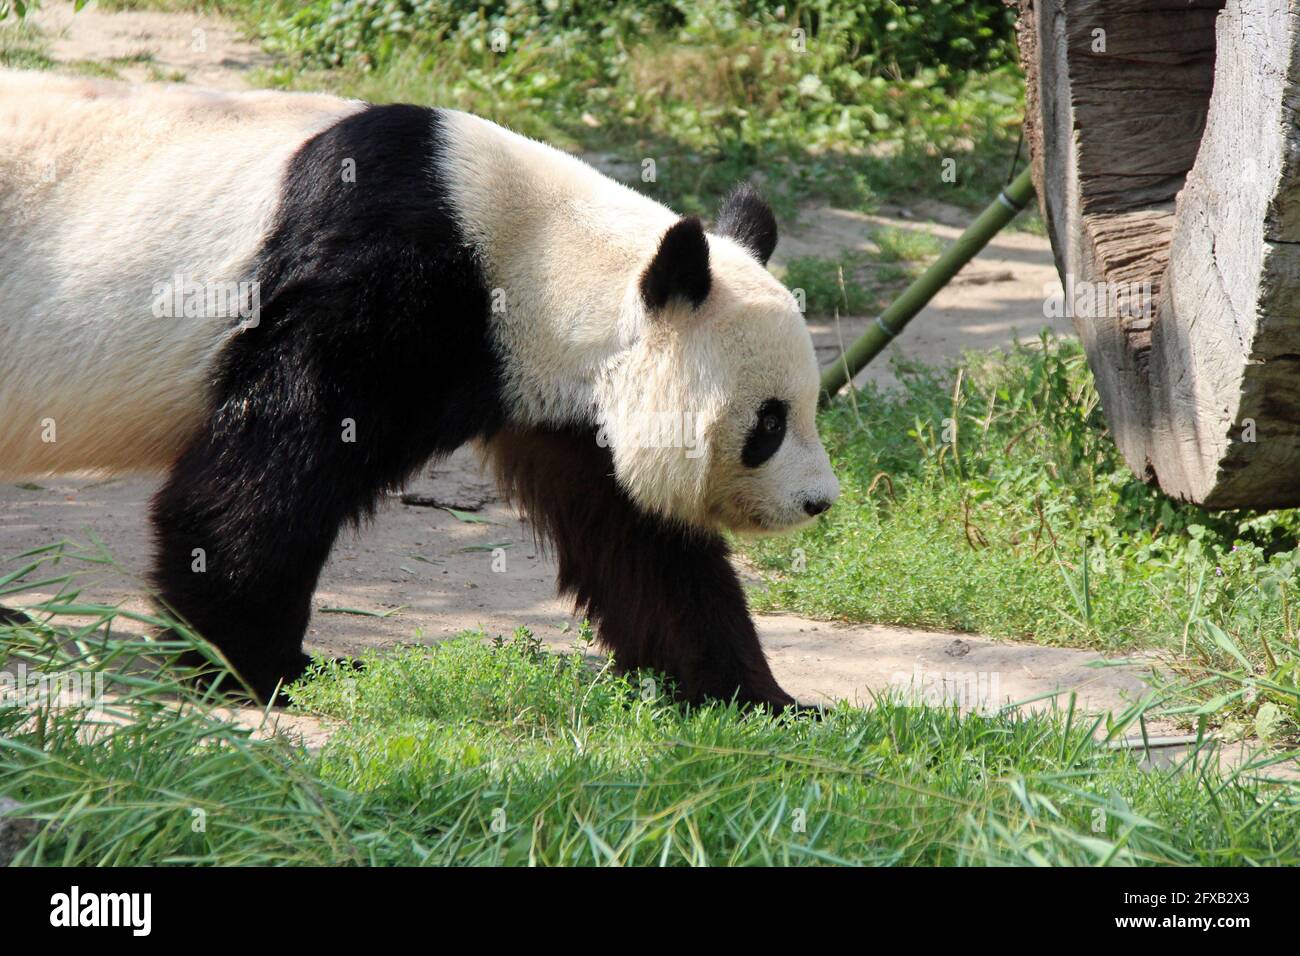 Giant Panda In A Zoo In Vienna Austria Stock Photo Alamy